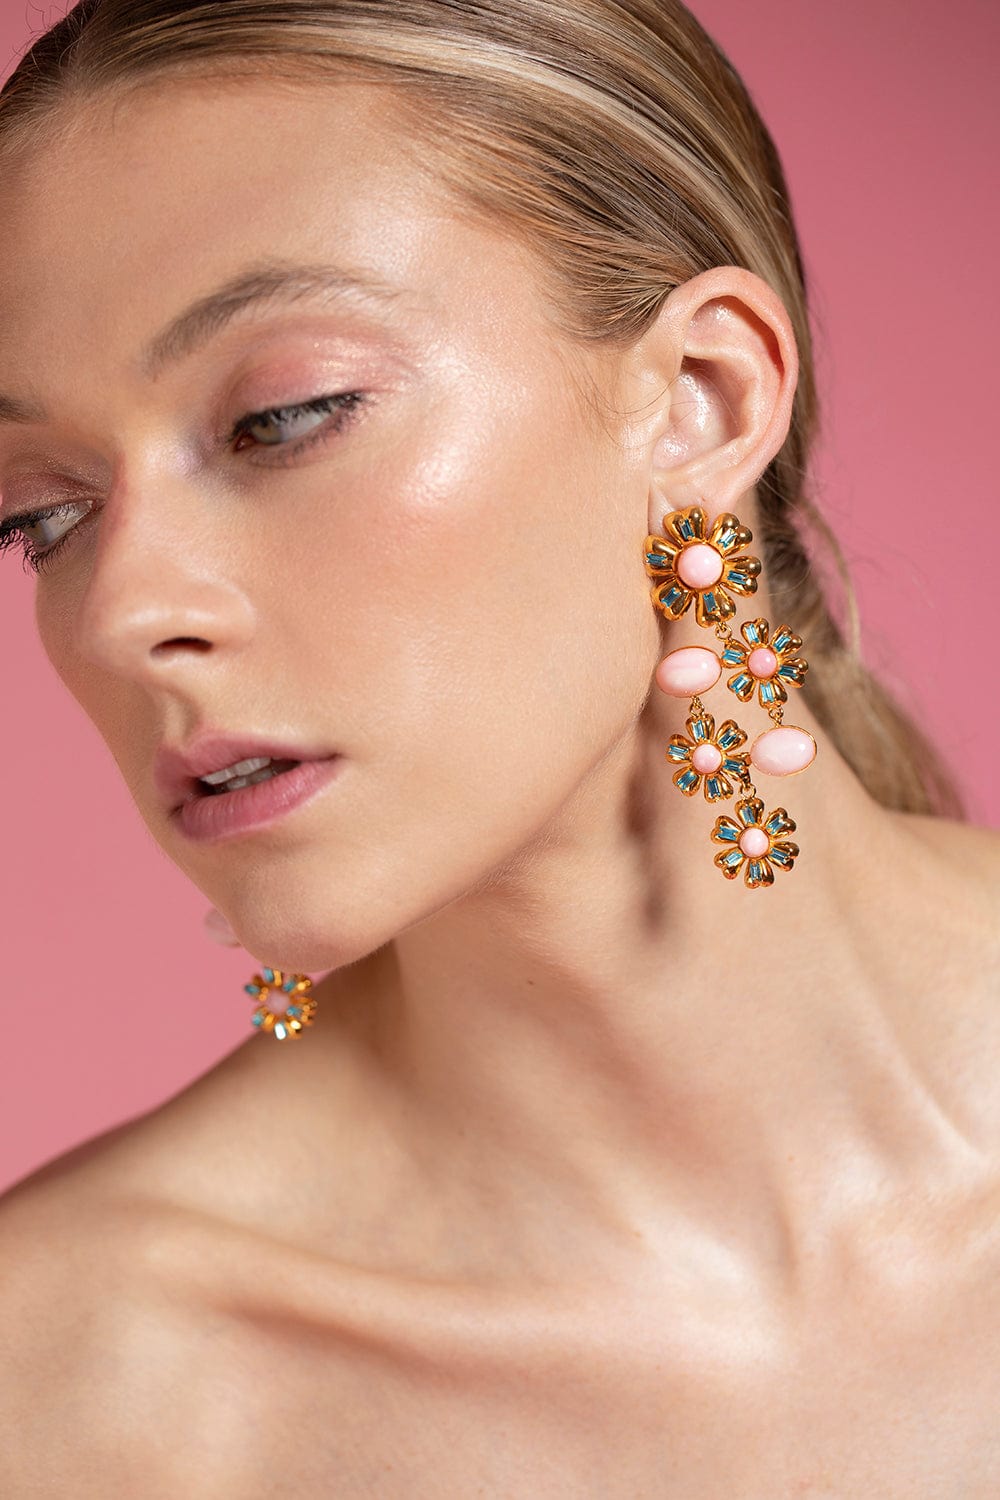 BOUNKIT JEWELRY-Pink Opal and Blue Quartz Drop Earrings-GOLD